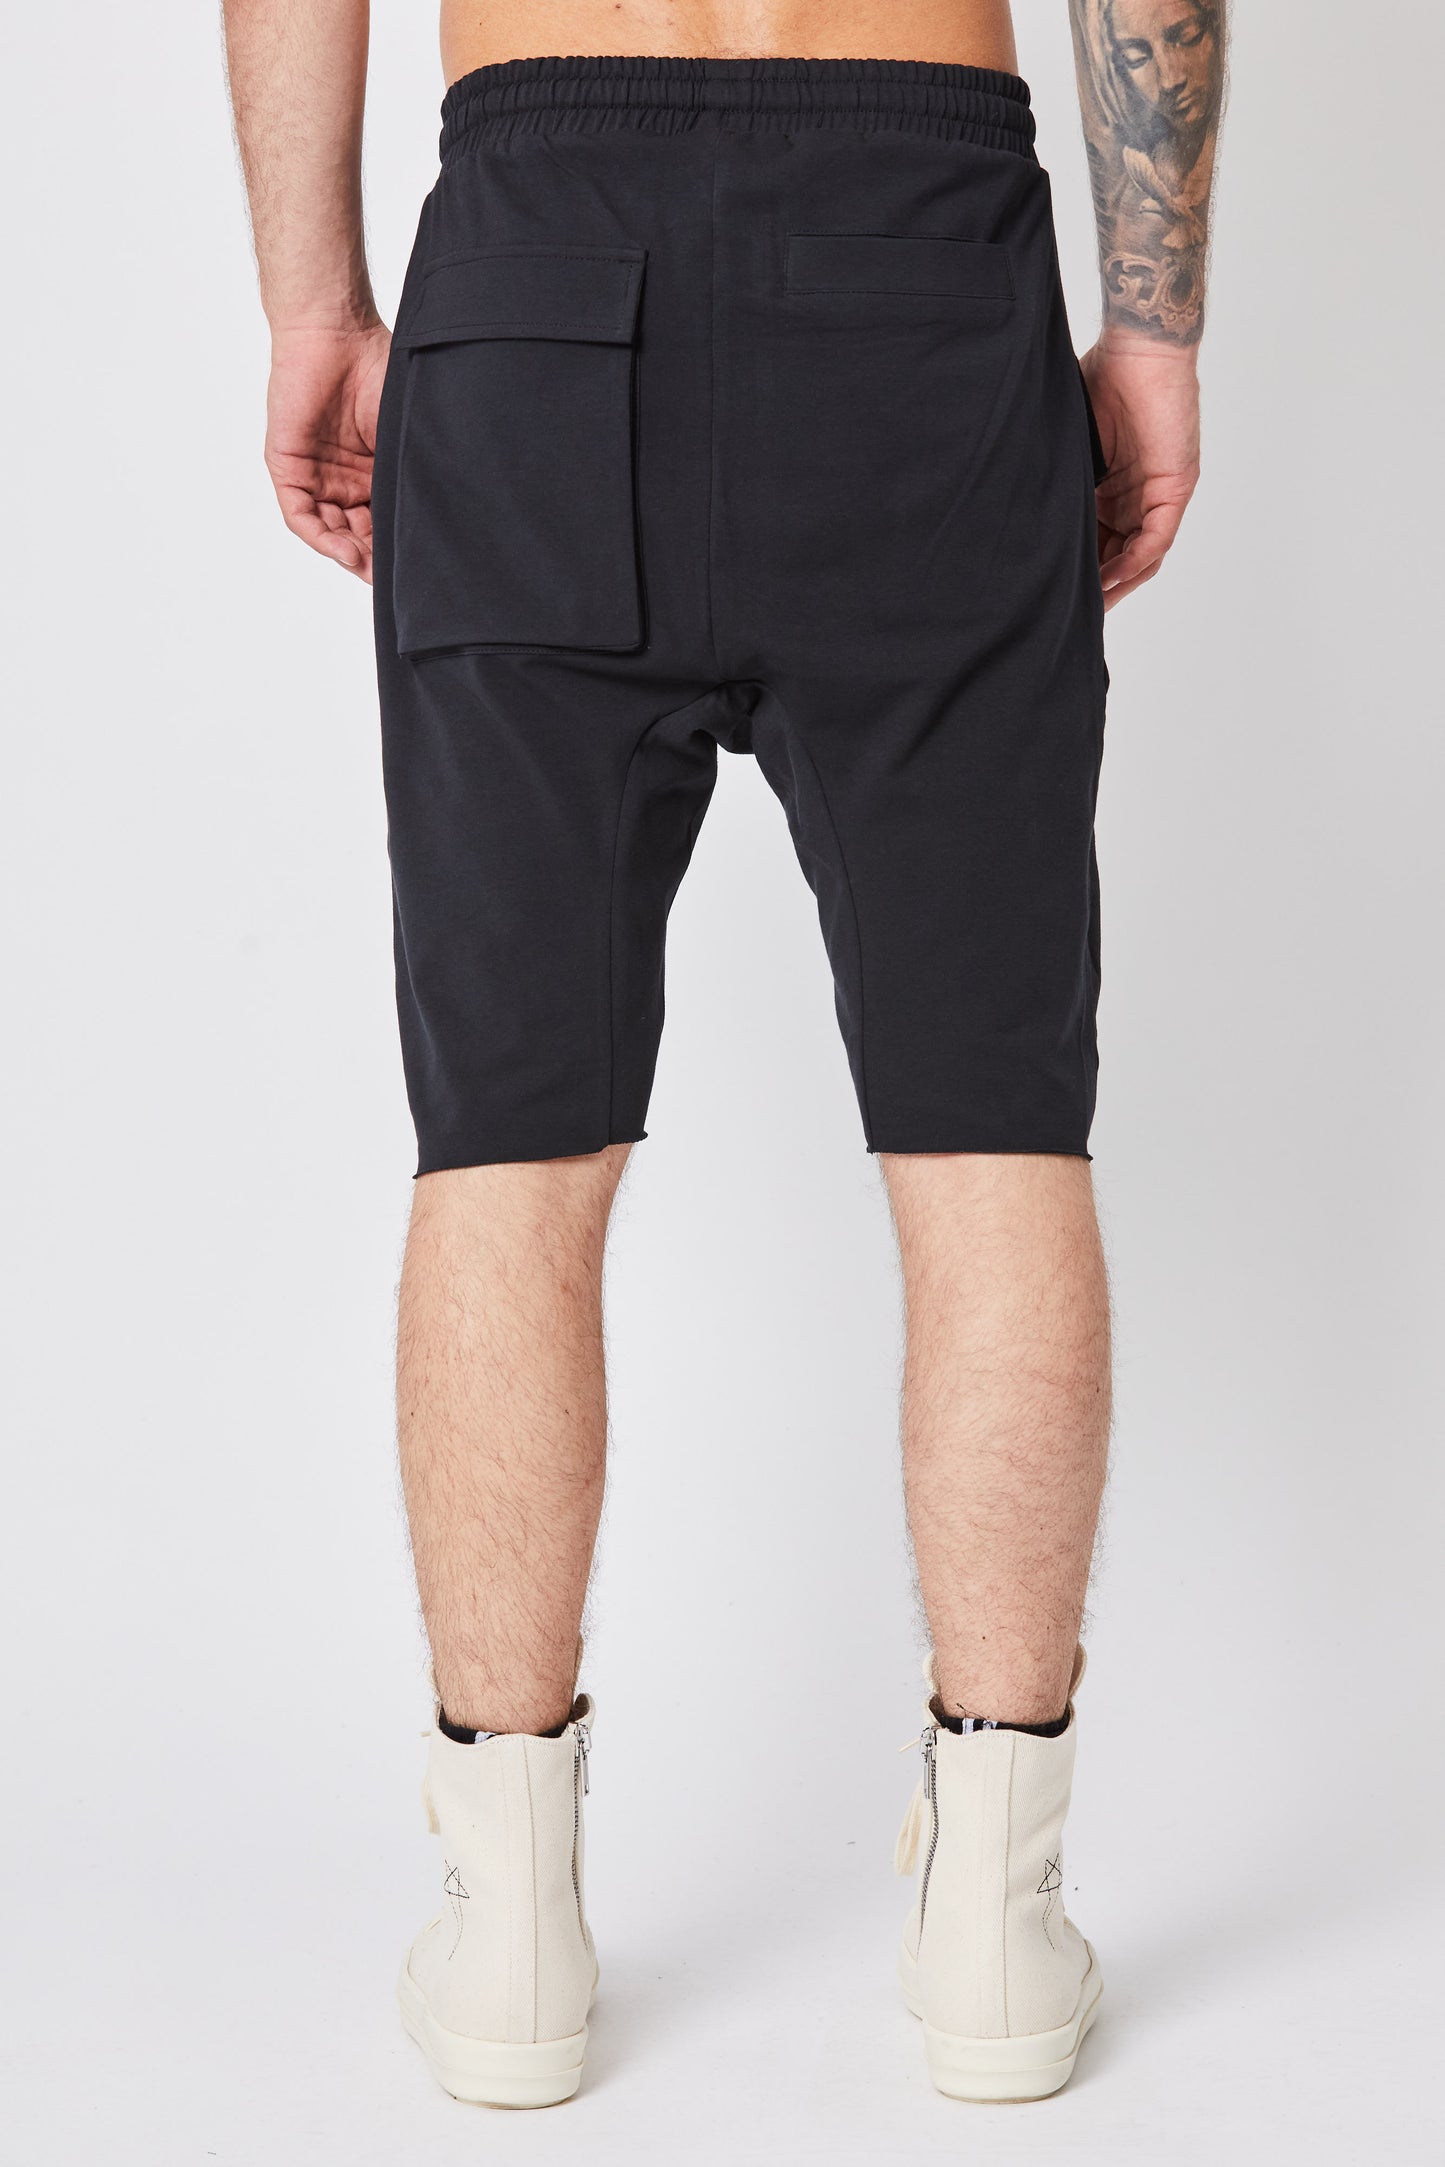 Black Stretch Cotton Modal Drop Crotch Shorts MST 379